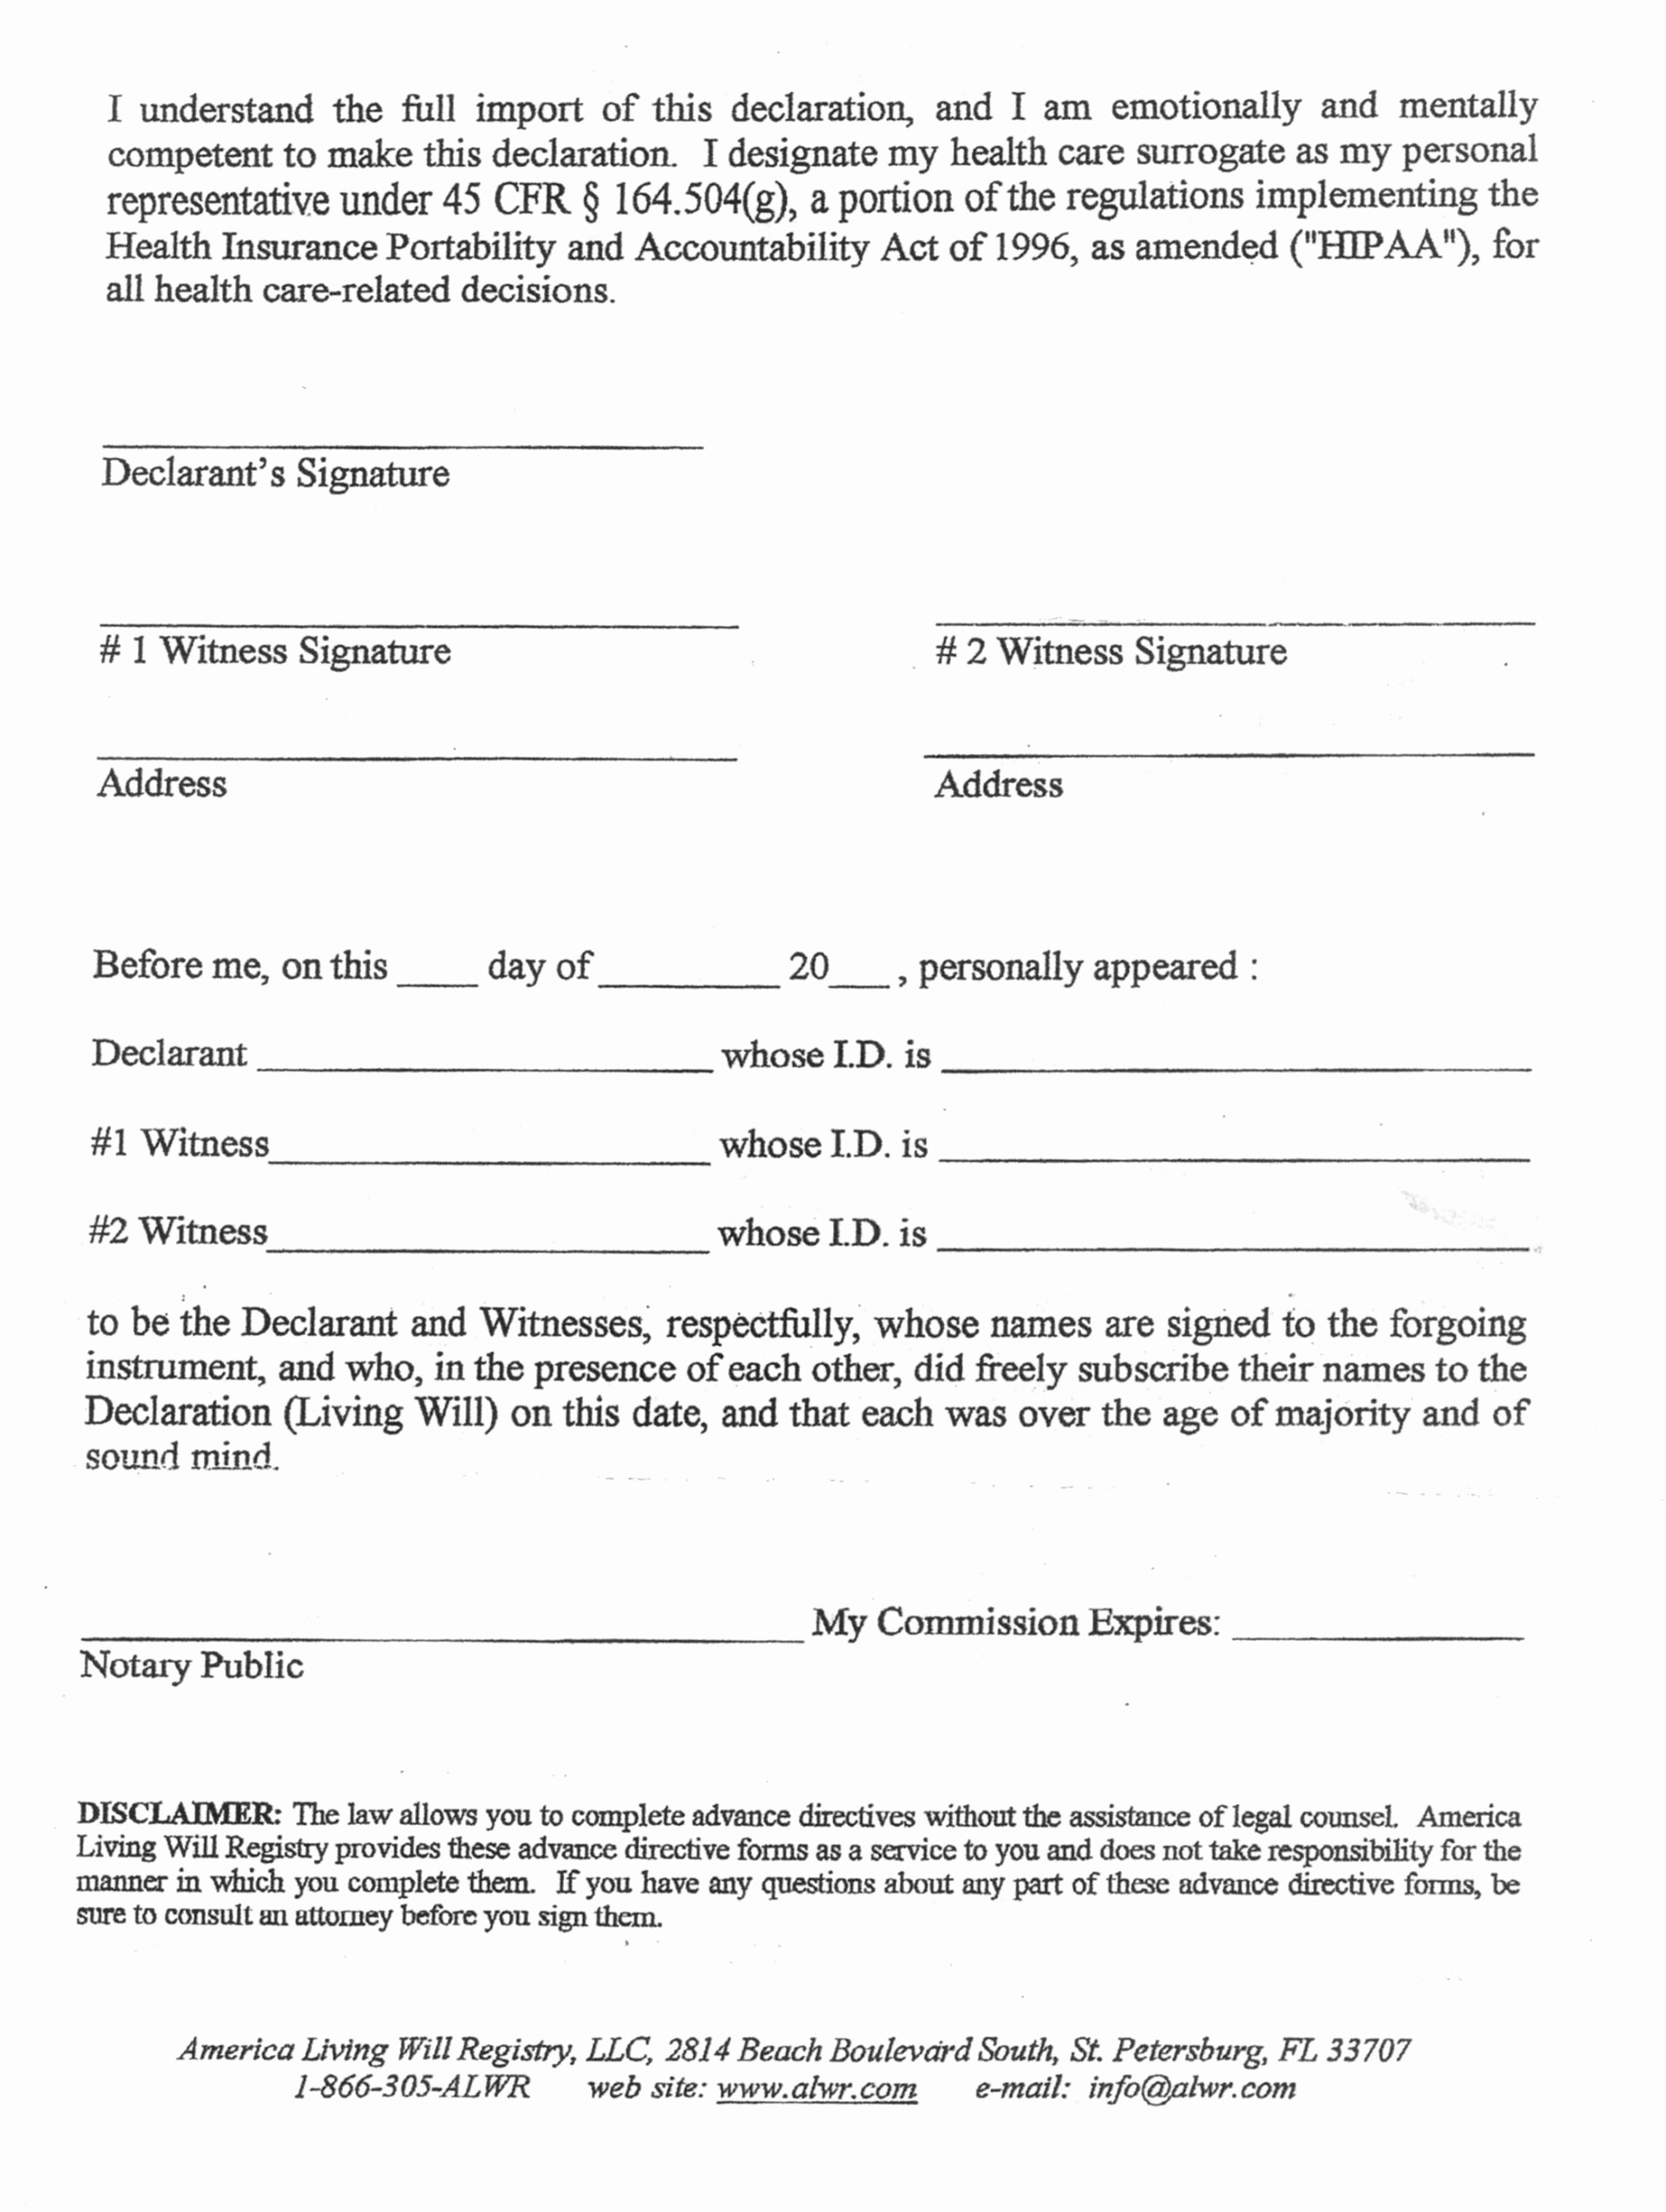 50 New Florida Designation Of Health Care Surrogate Form Free Document